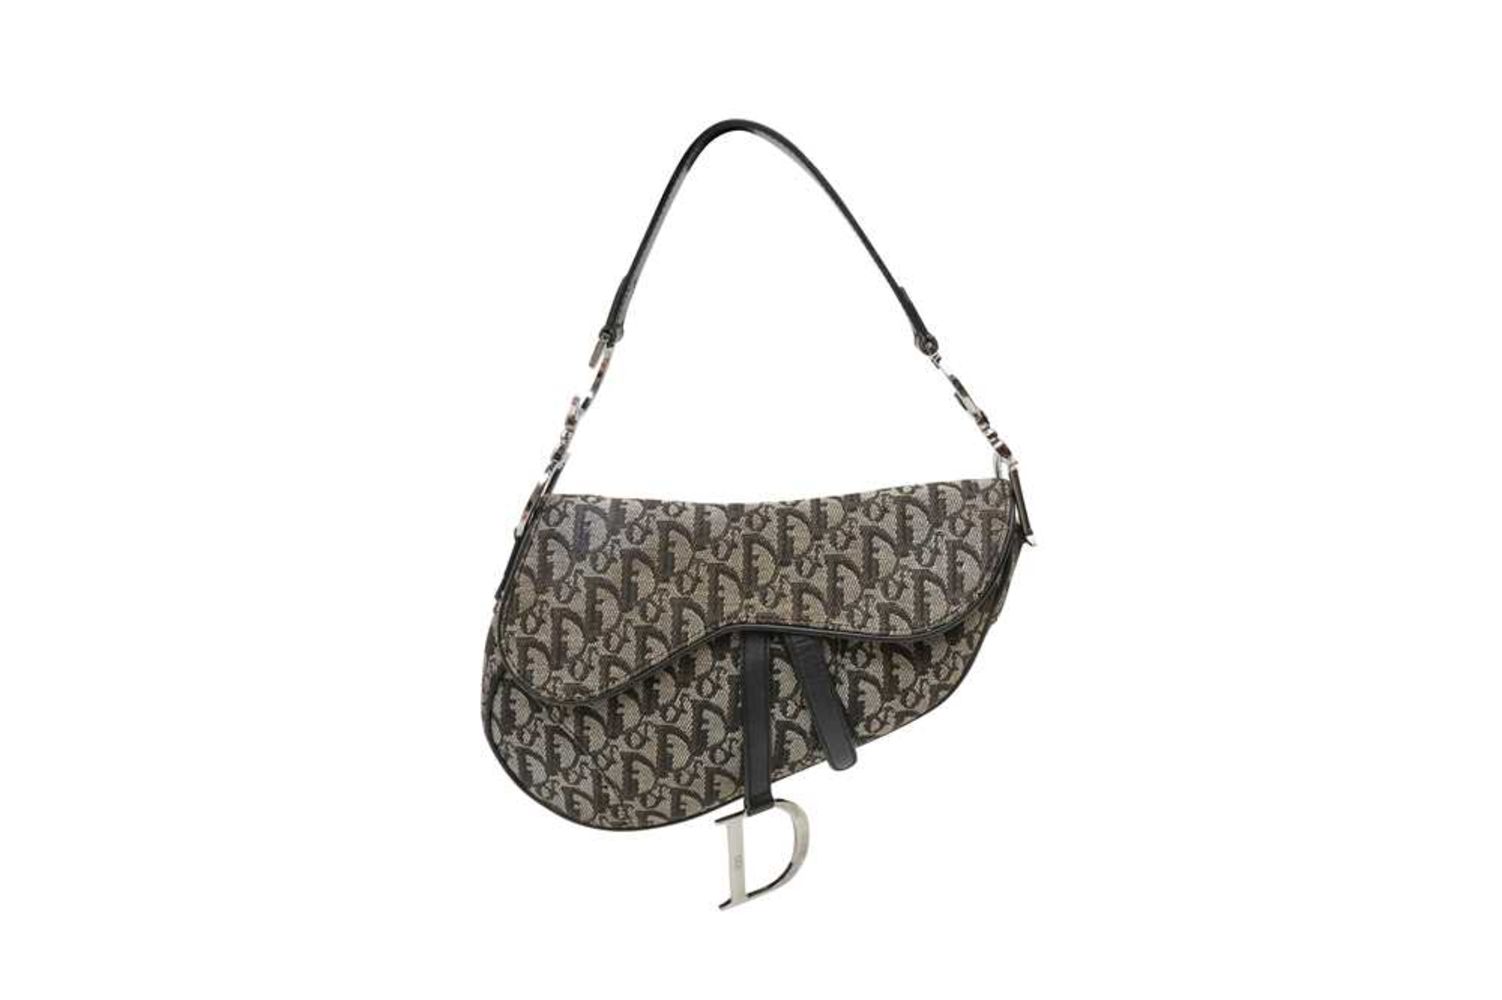 Designer Handbags and Fashion - Chiswick Auctions